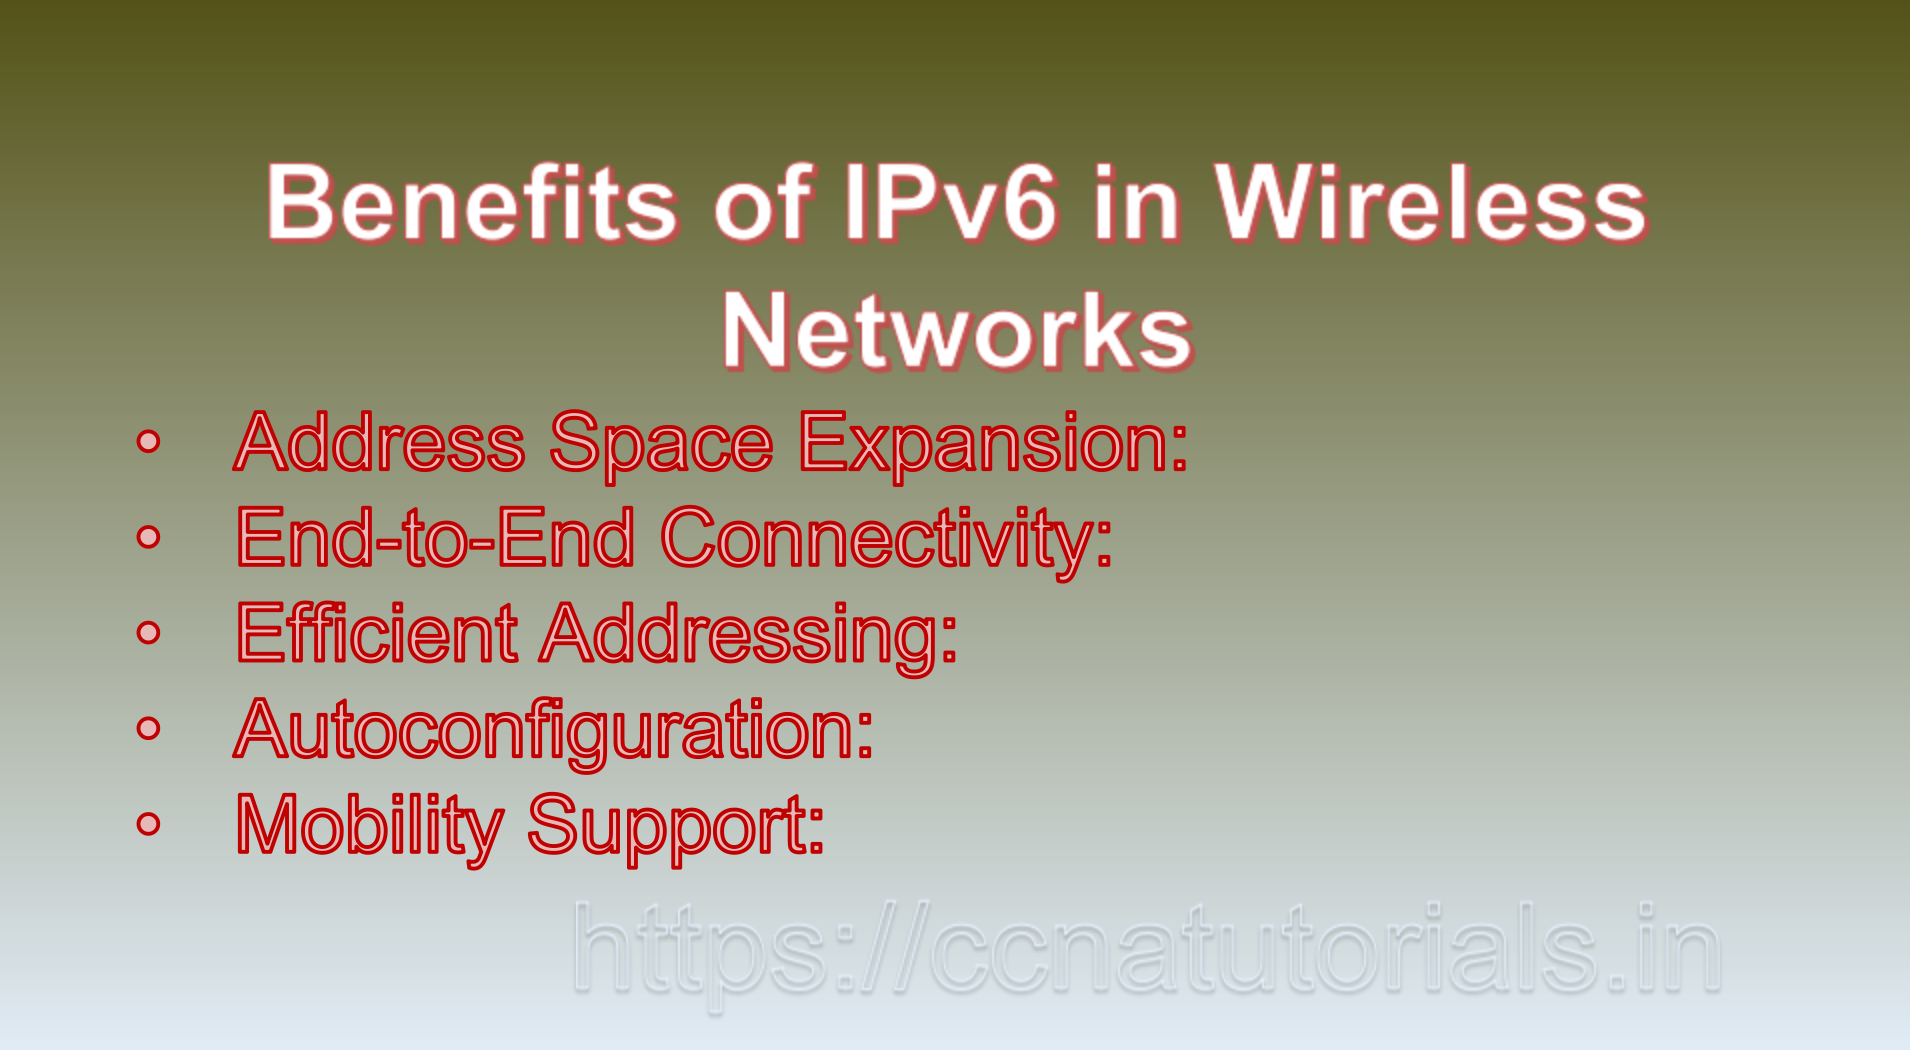 IPv6 in Wireless Networks, ccna, ccna tutorials